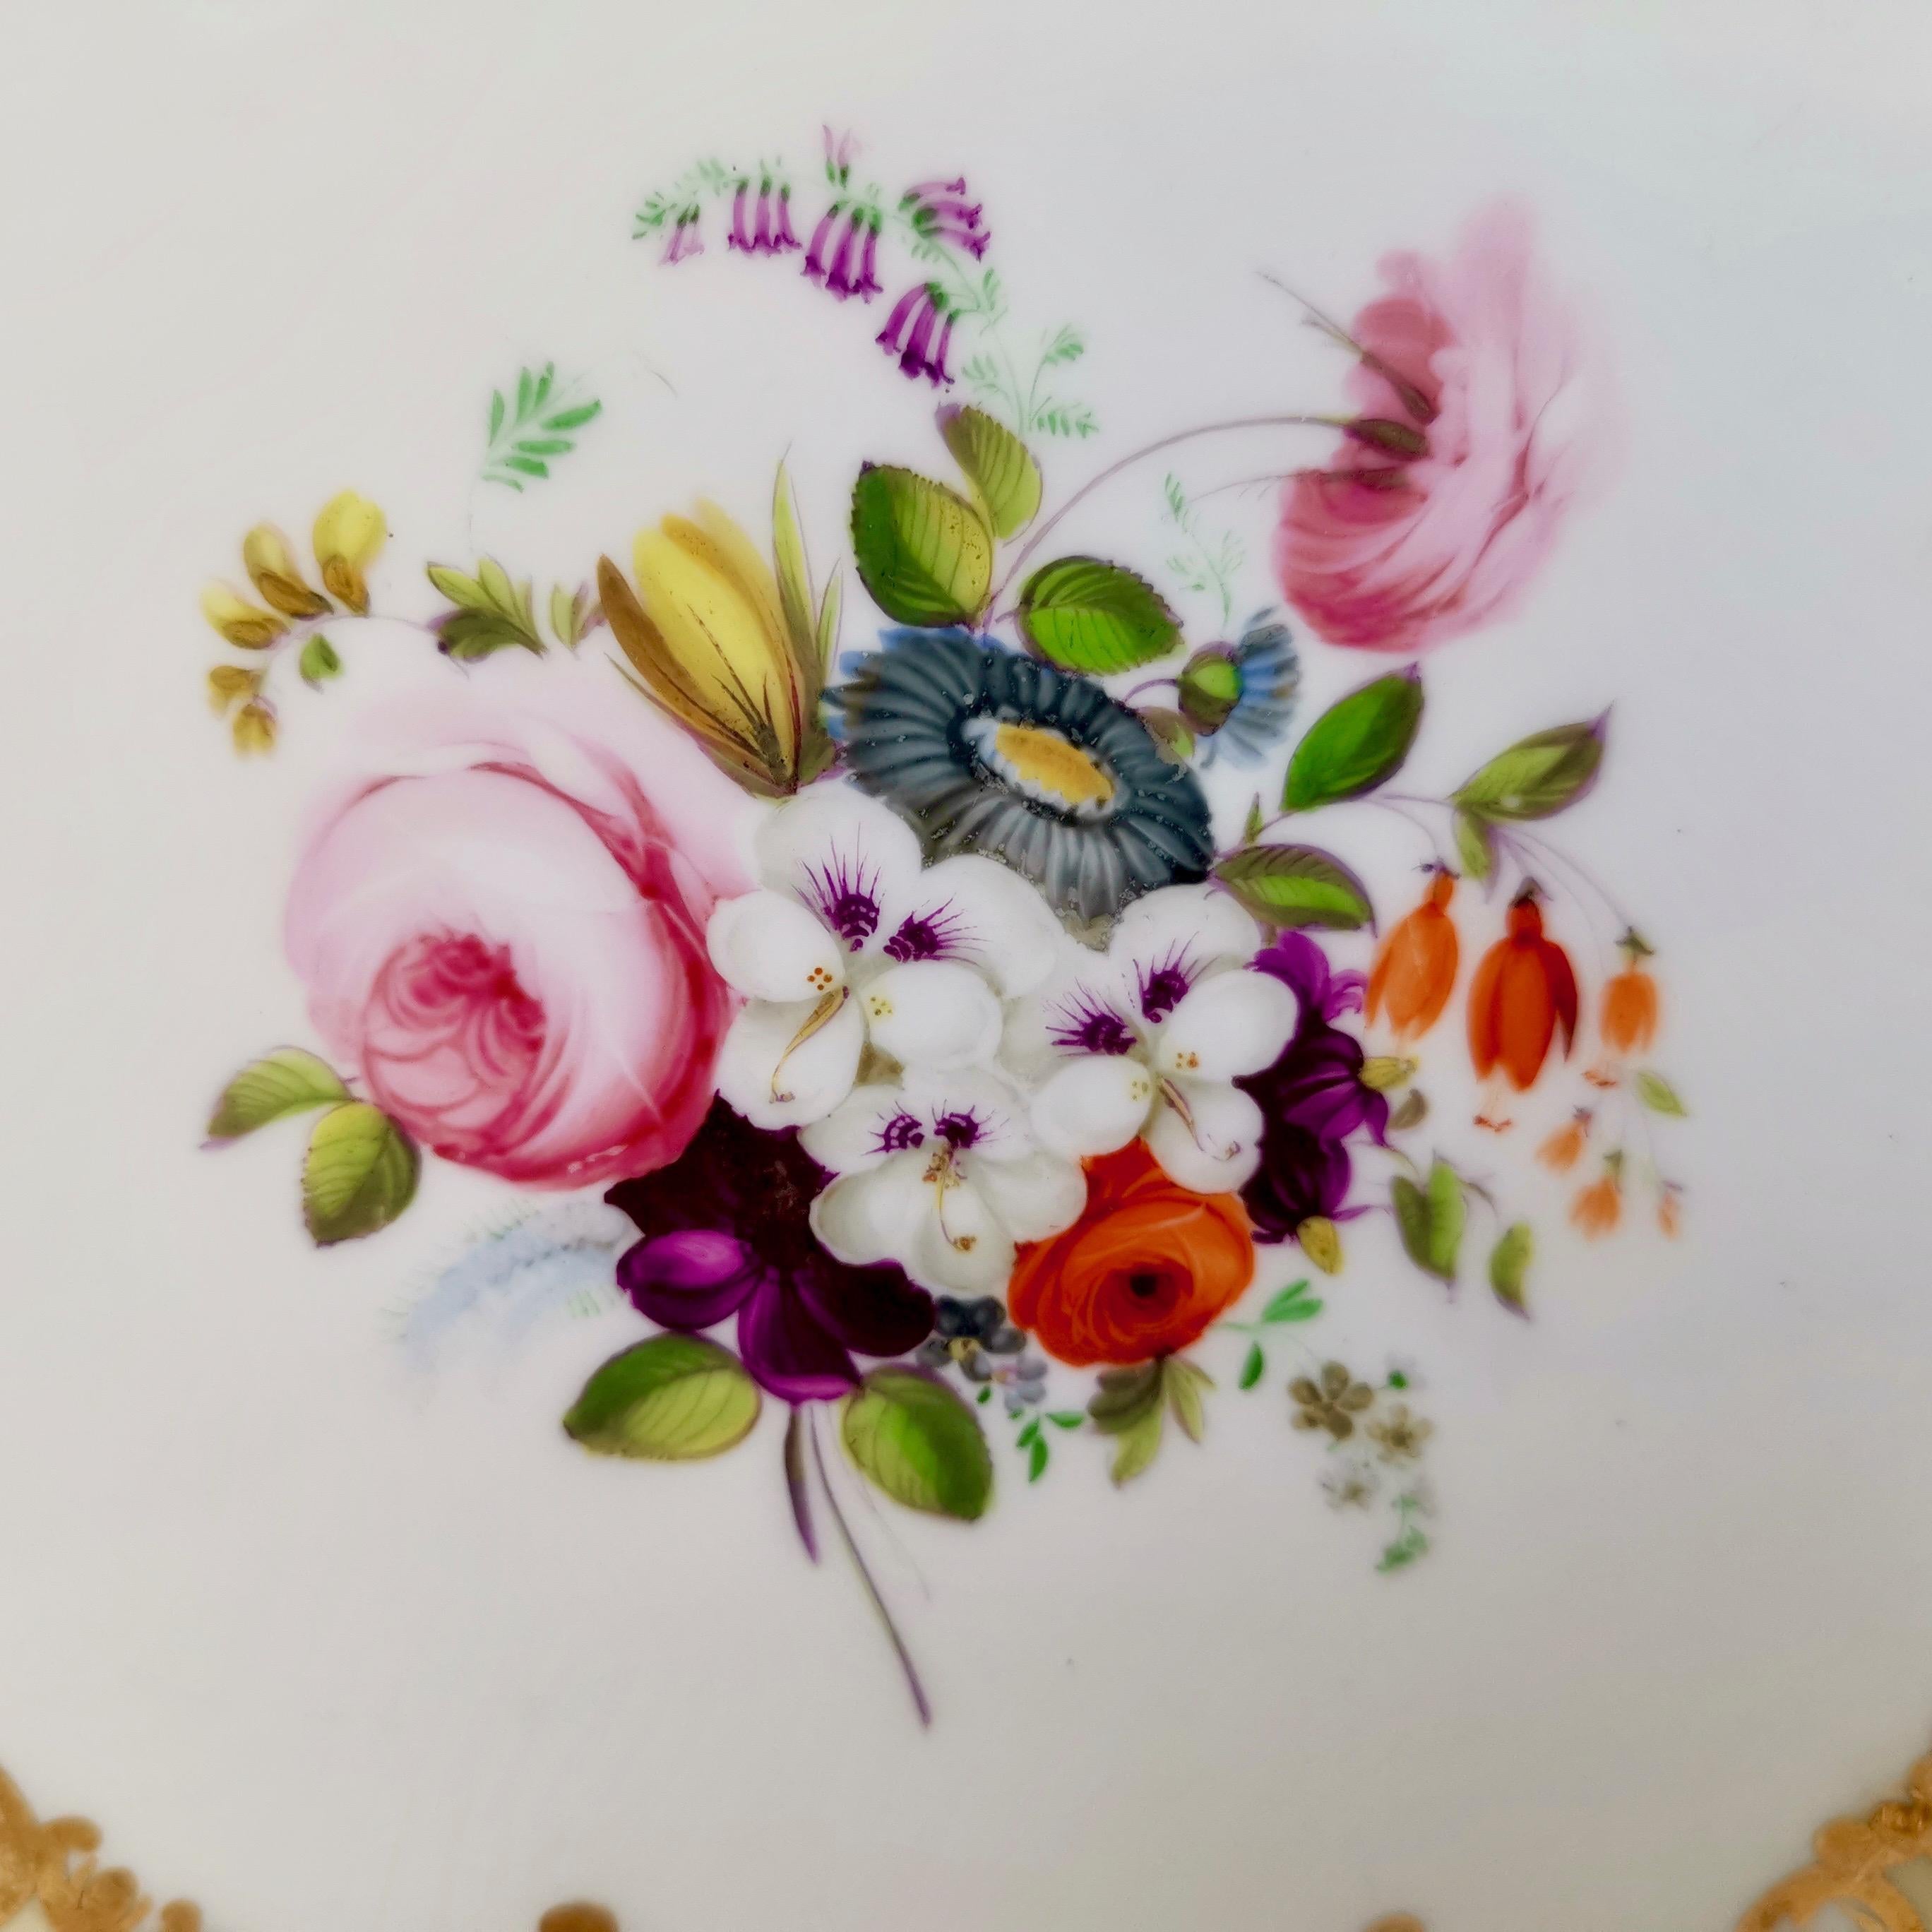 English Coalport Porcelain Cake Plate, Beige and Gilt, Flowers by Thomas Dixon, 1837